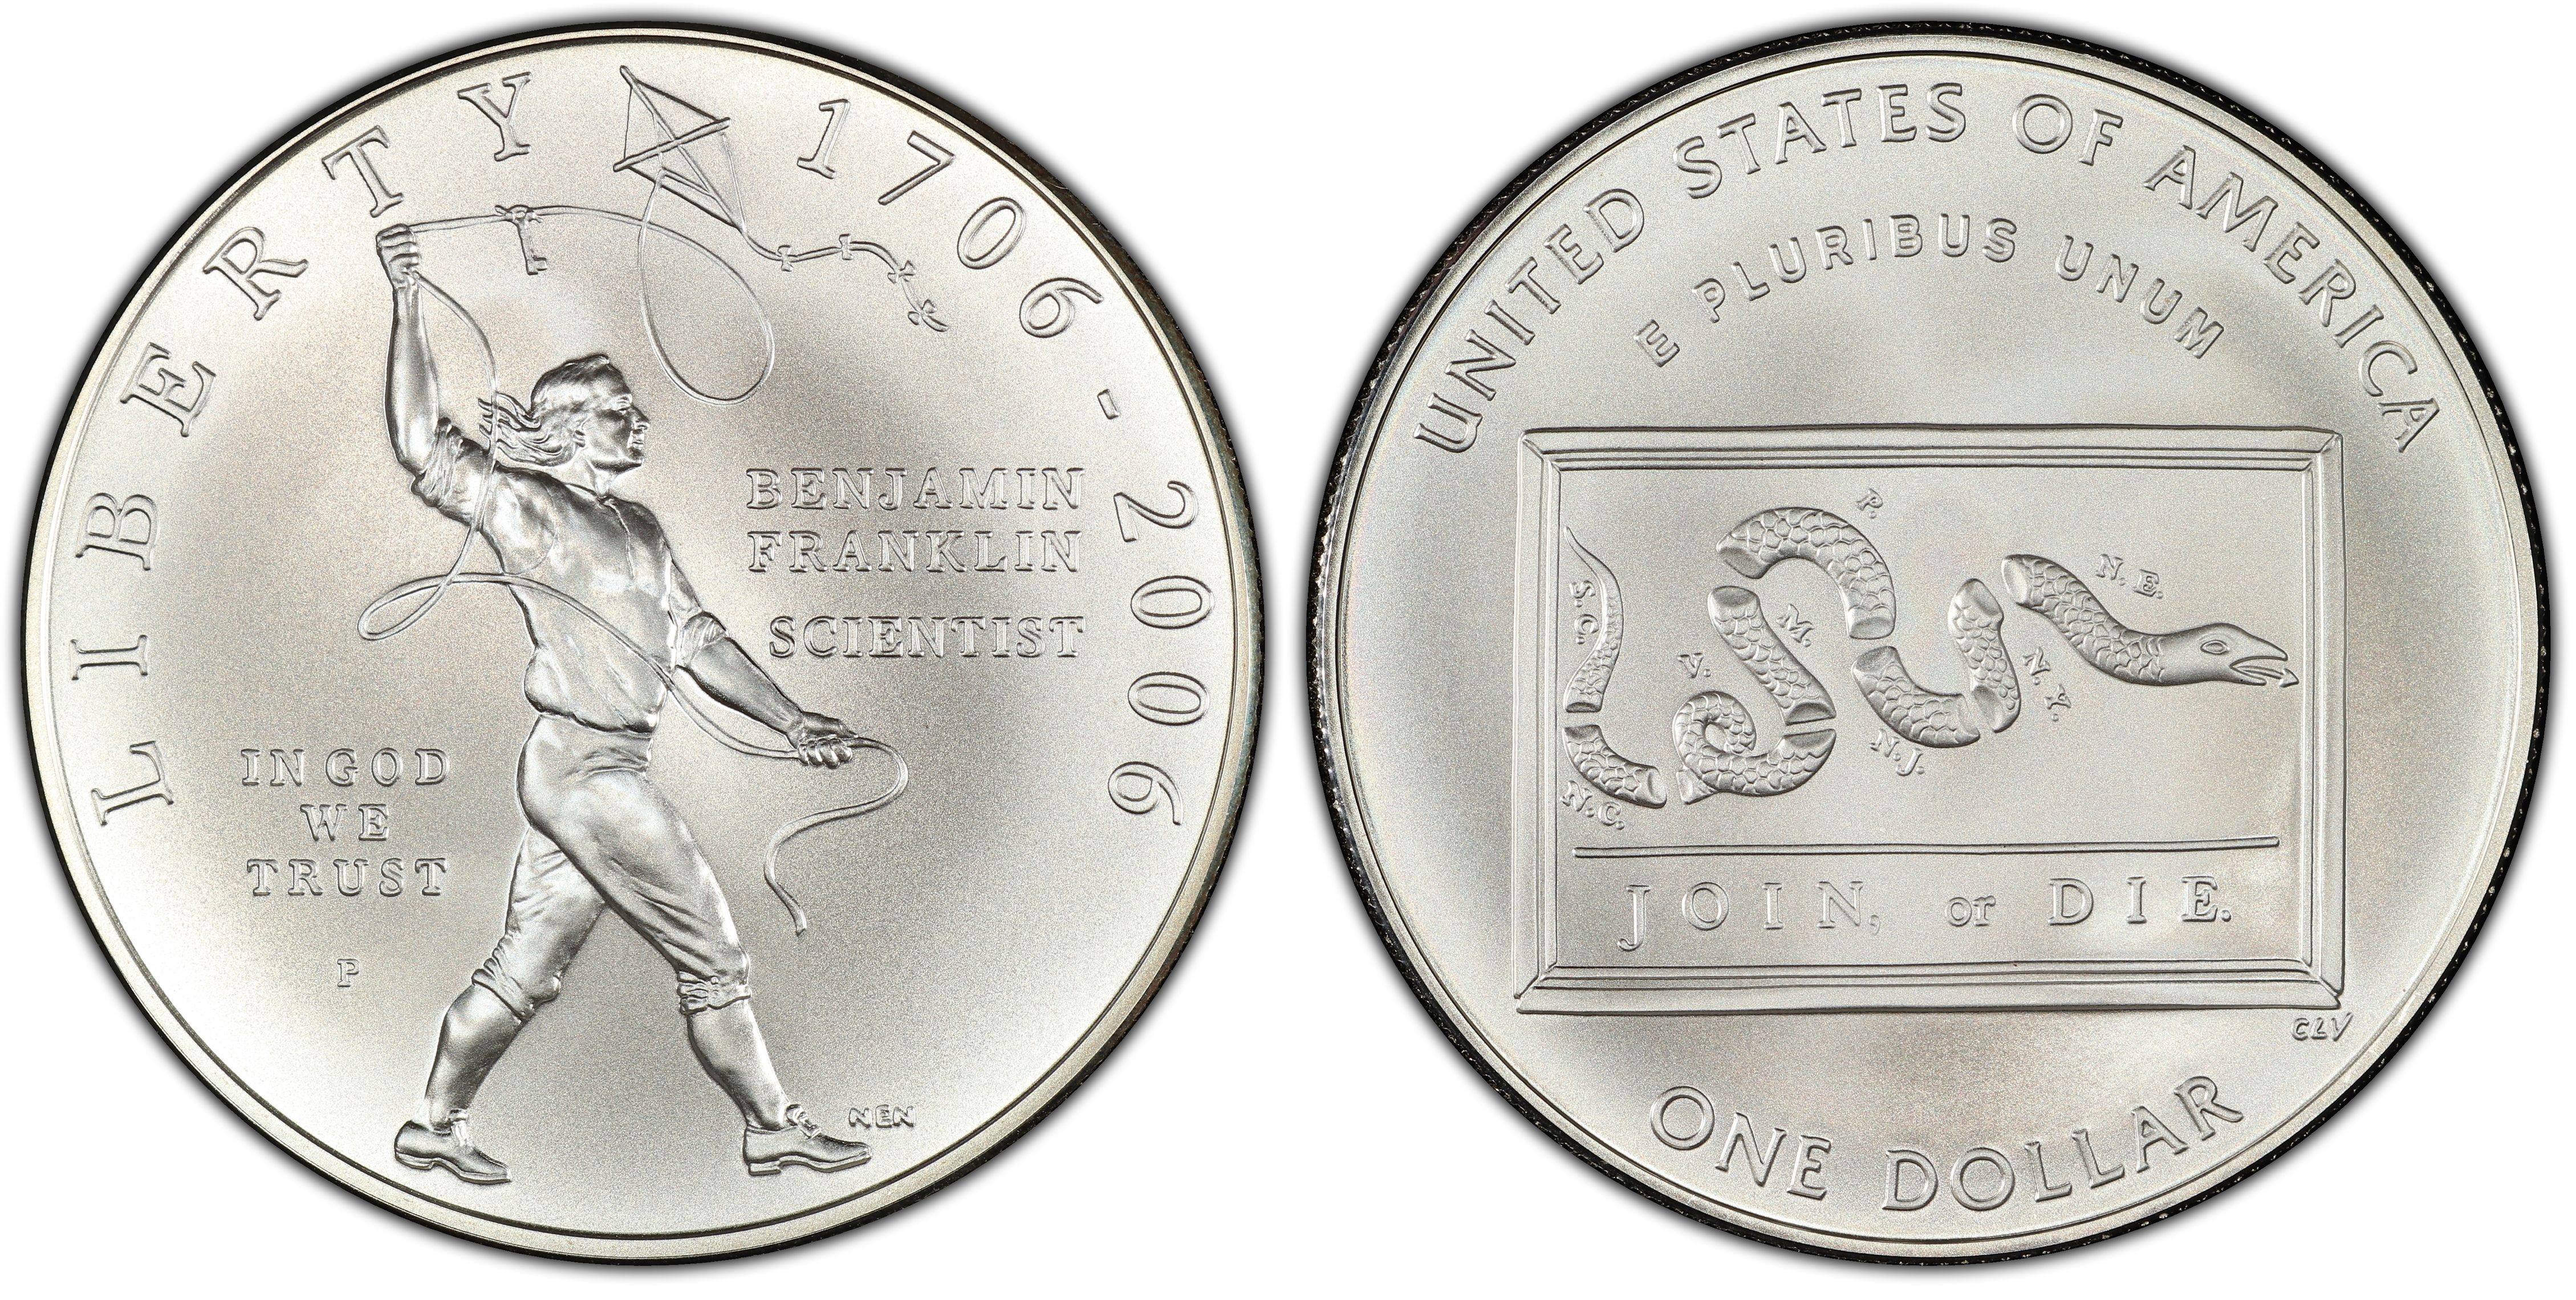 2006 BU Benjamin Franklin Scientist Silver Dollar US Mint Commemorative $1 Coin